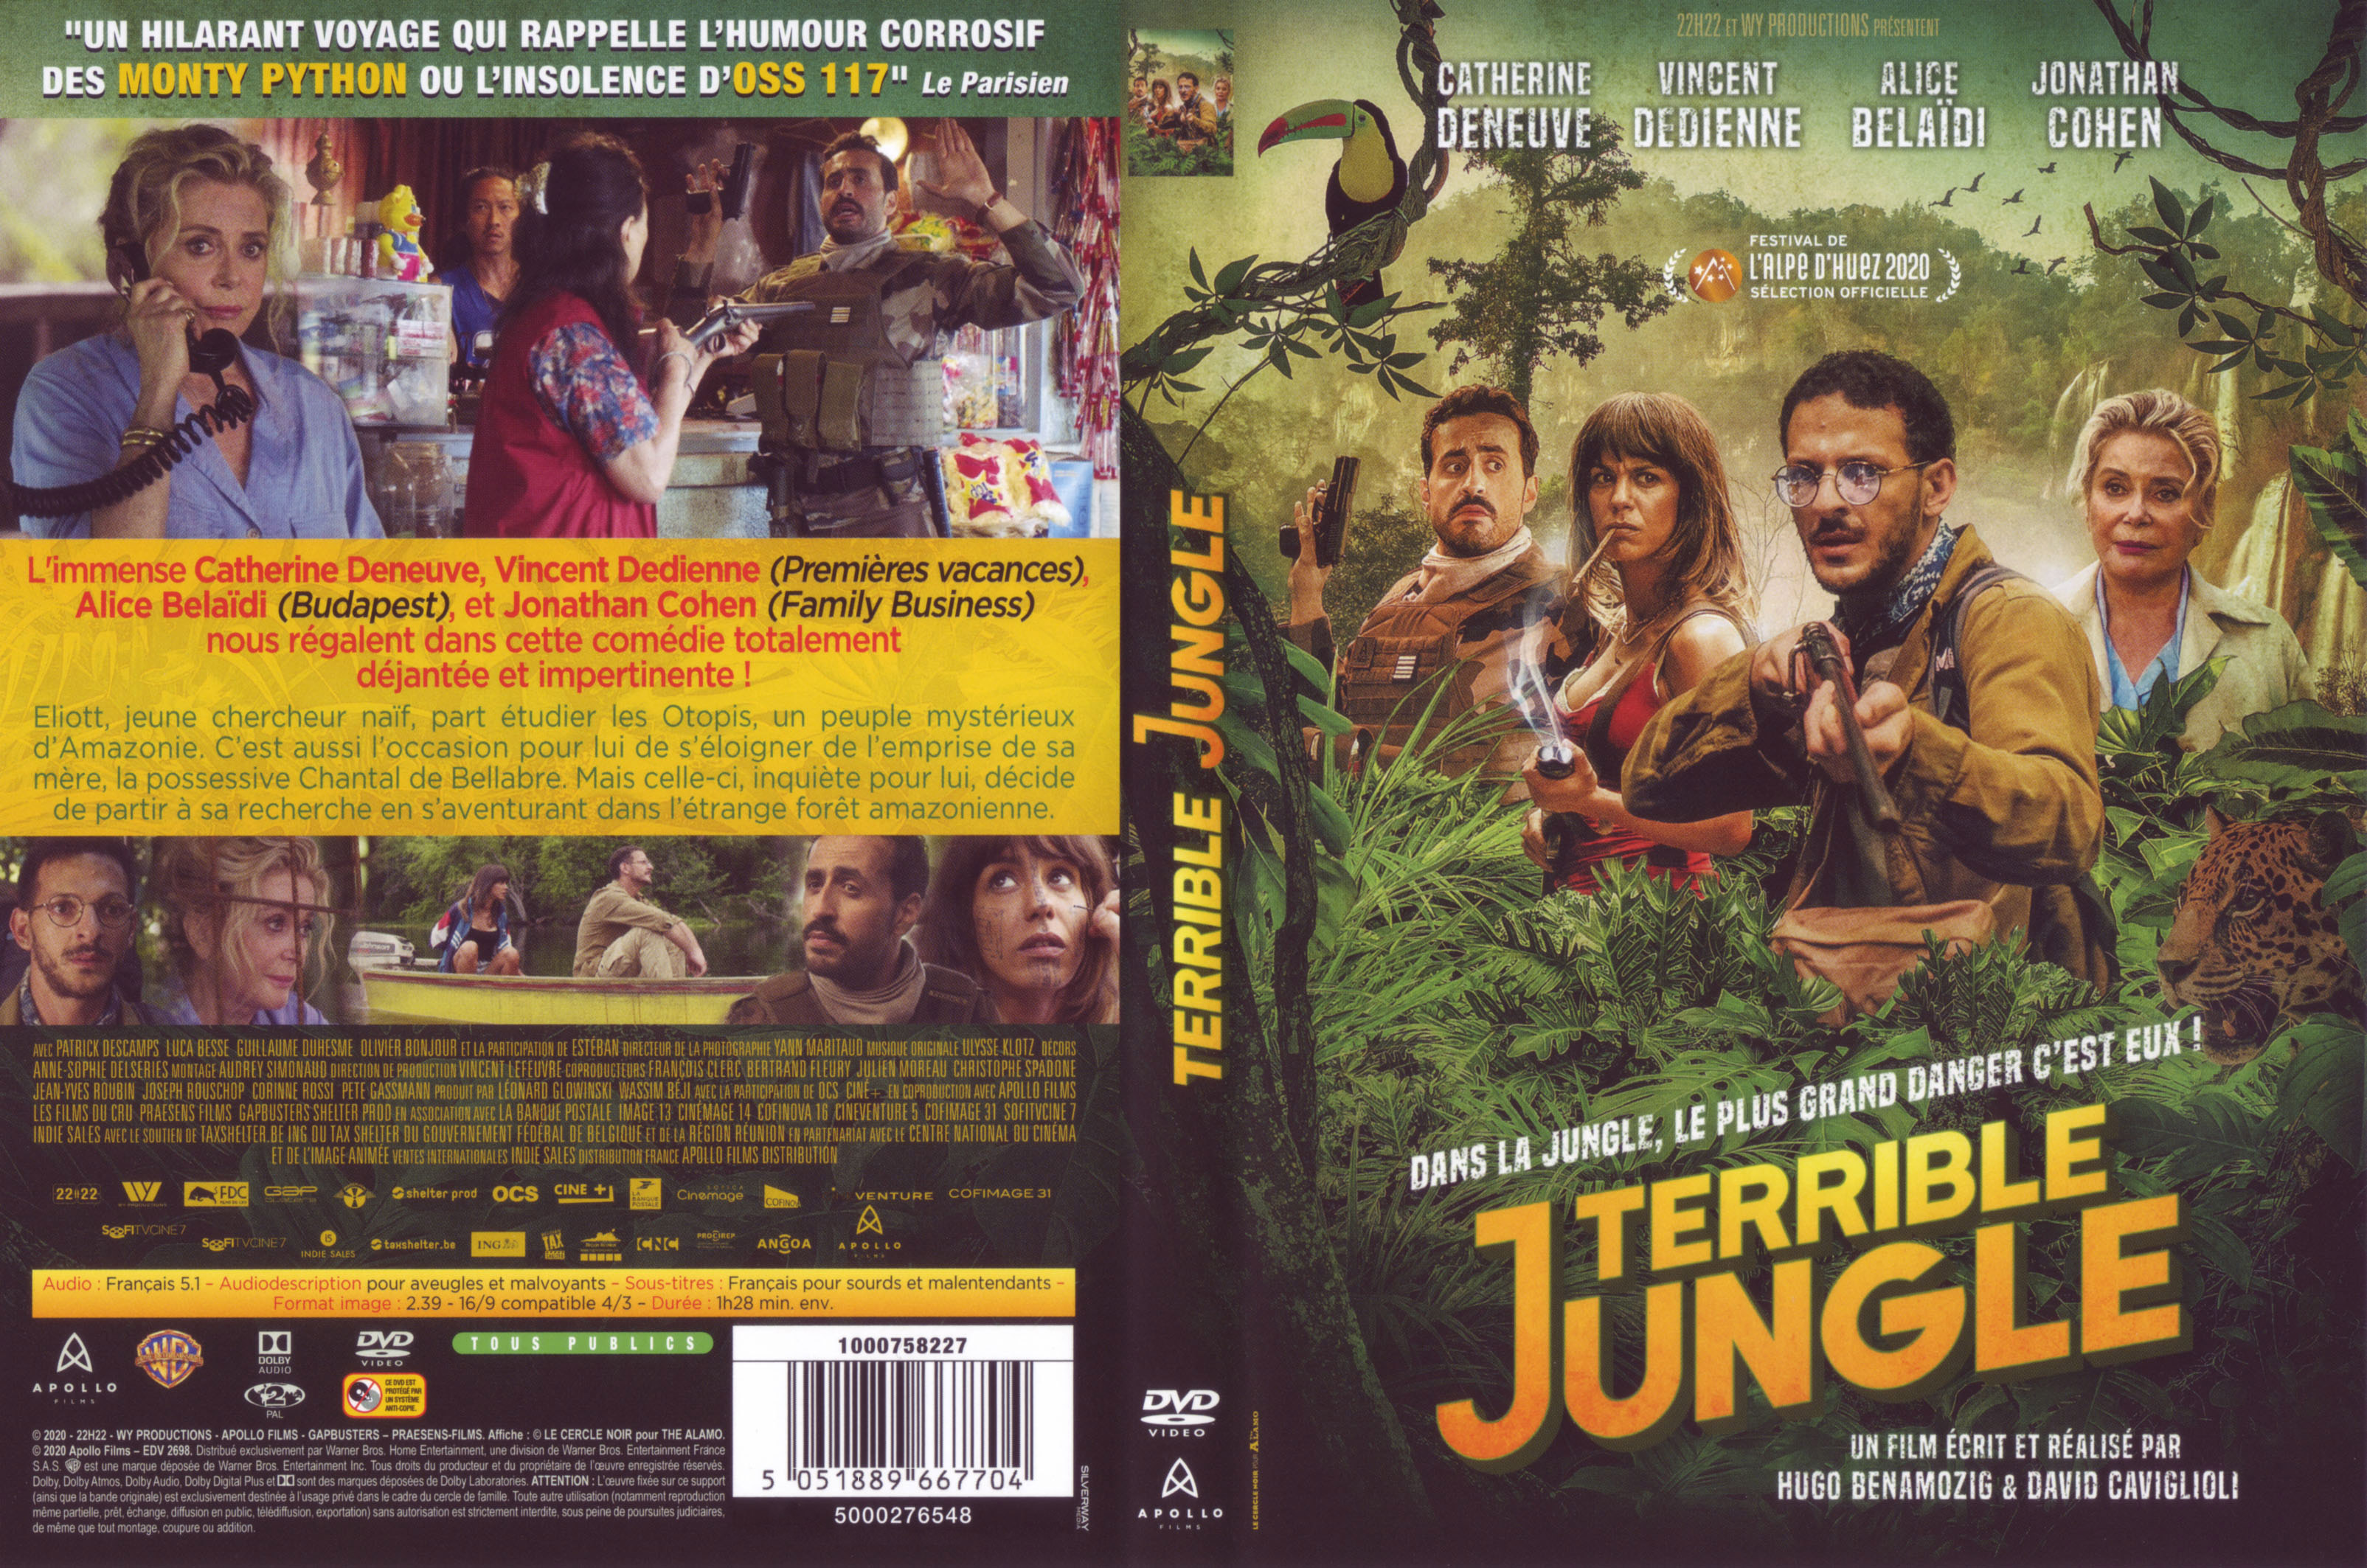 Jaquette DVD Terrible jungle